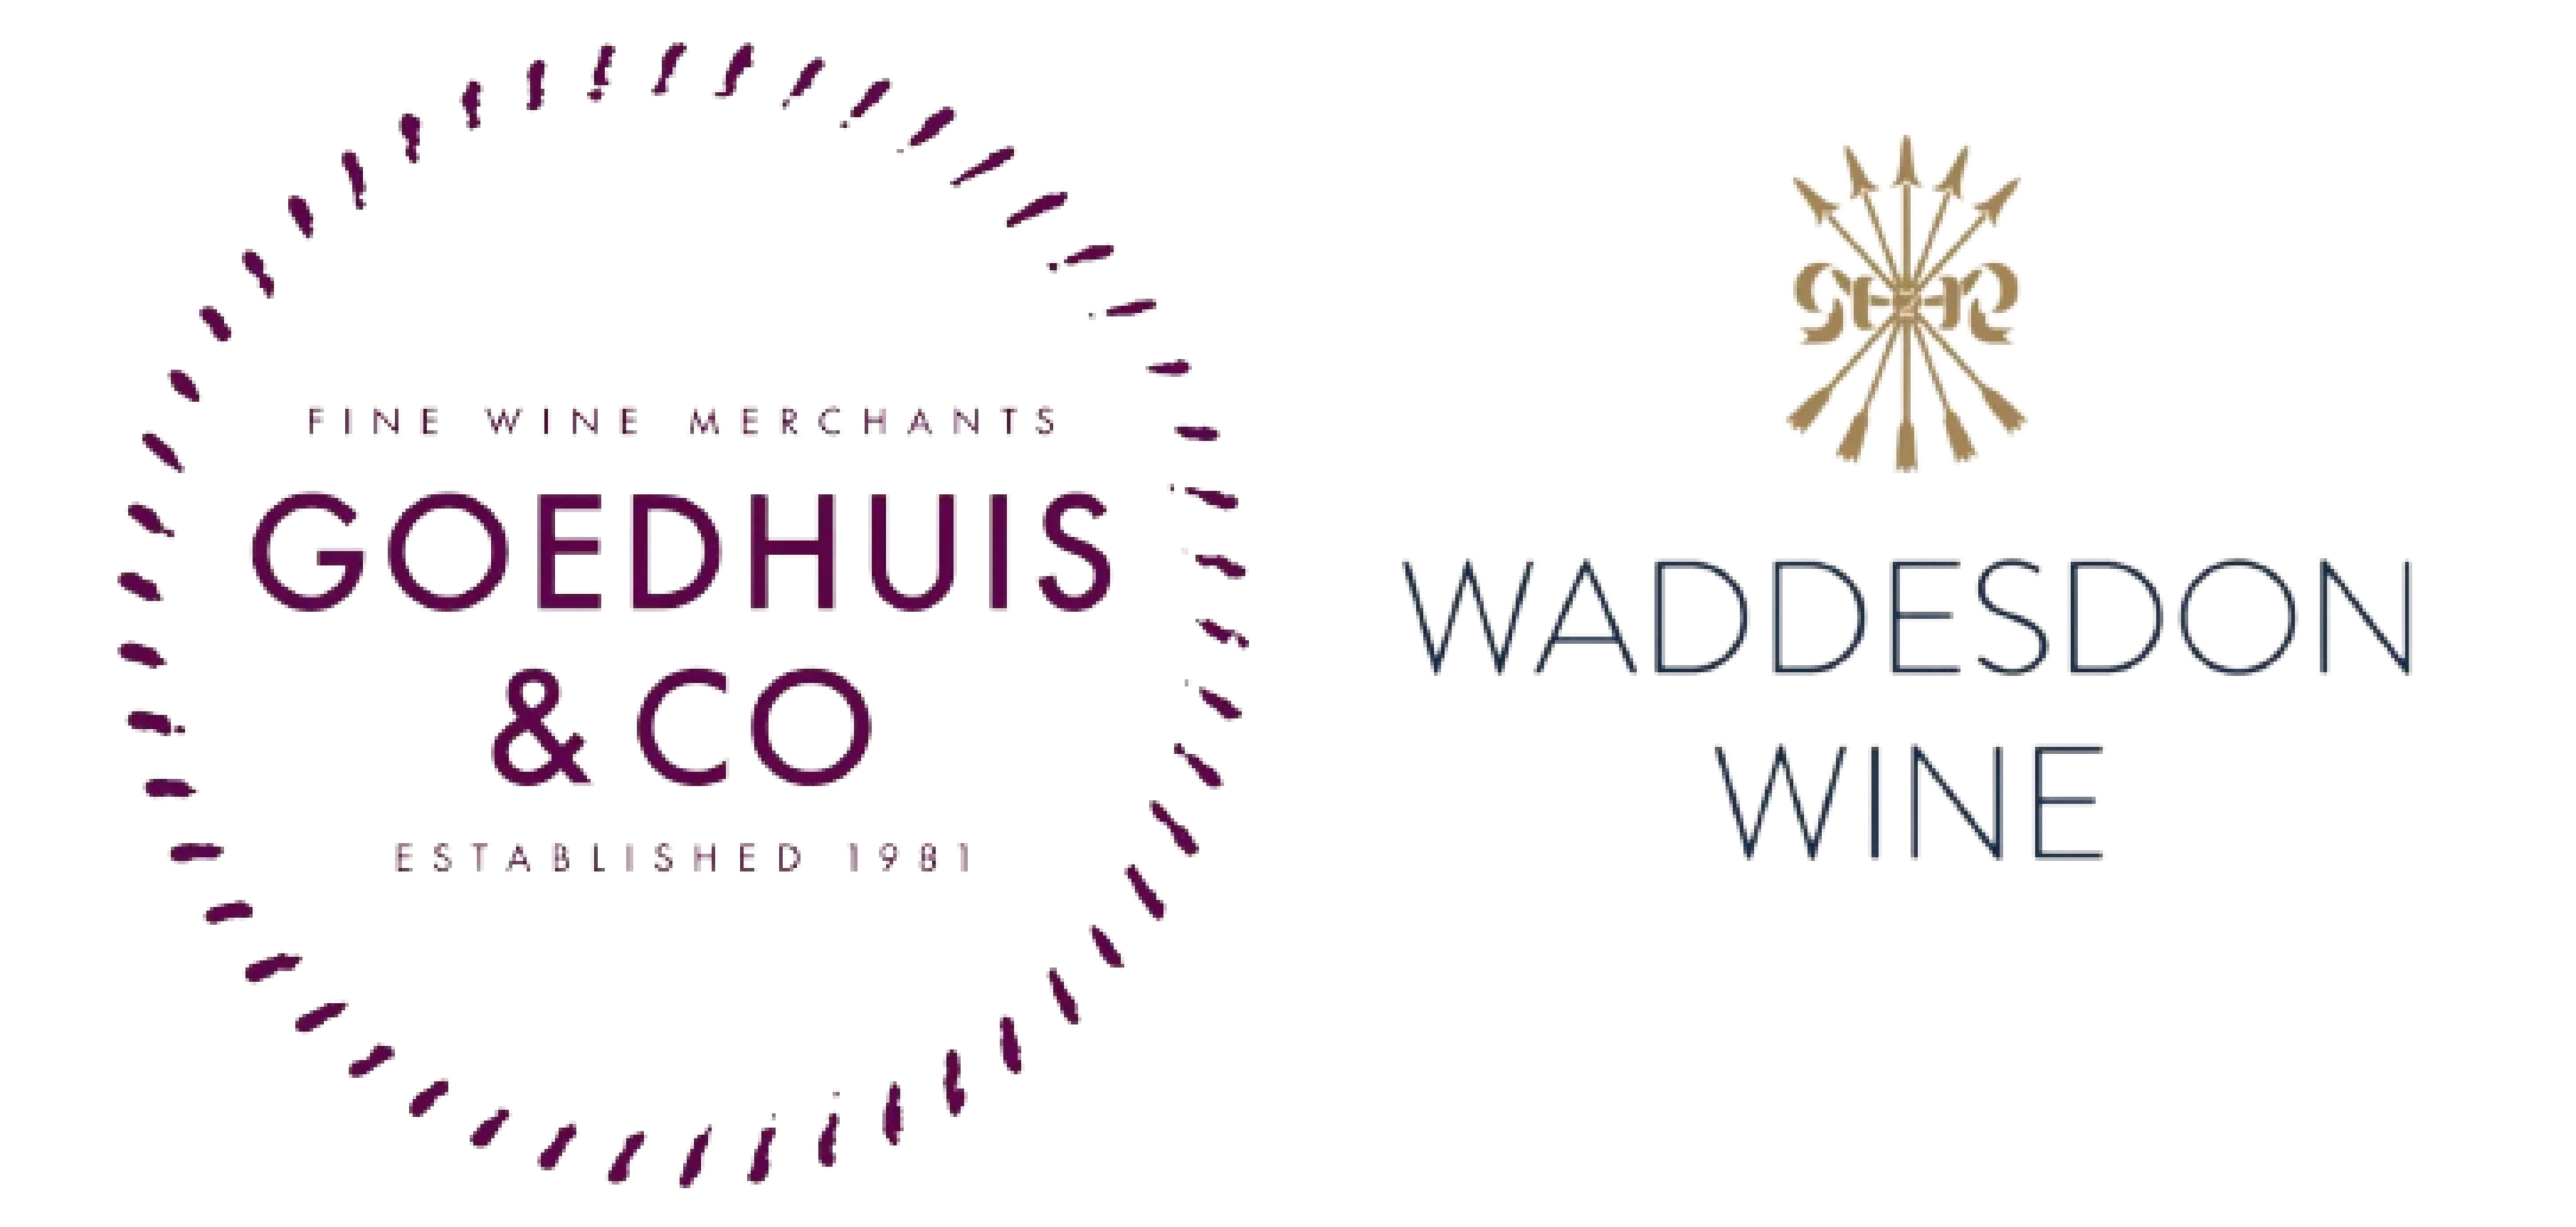 Waddesdon logo